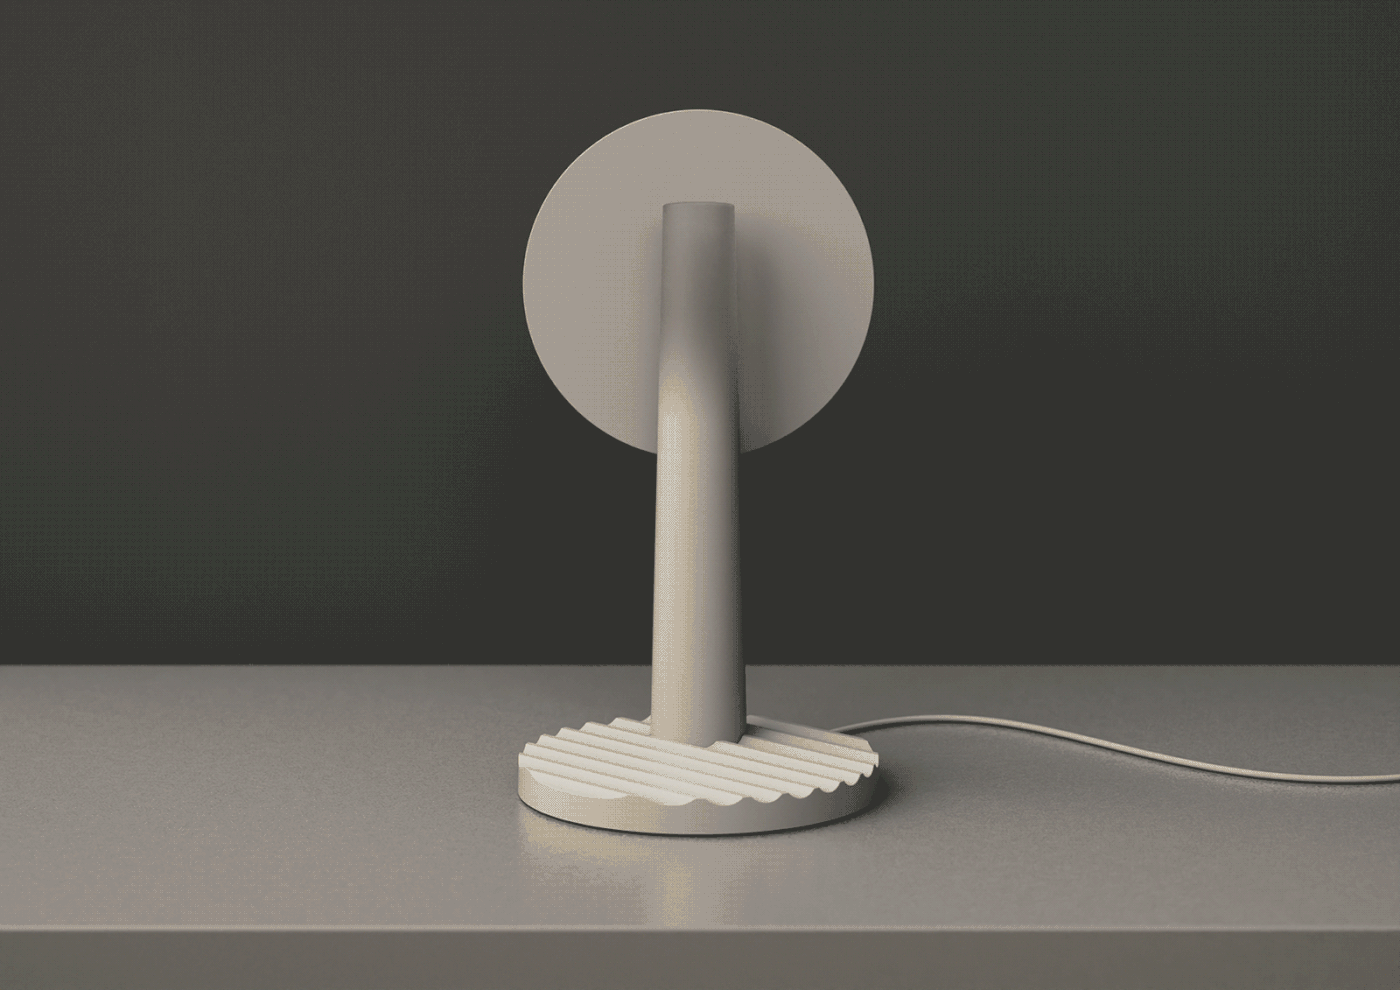 charger design home industrial design  Lamp light product design  qvarta table ukraine